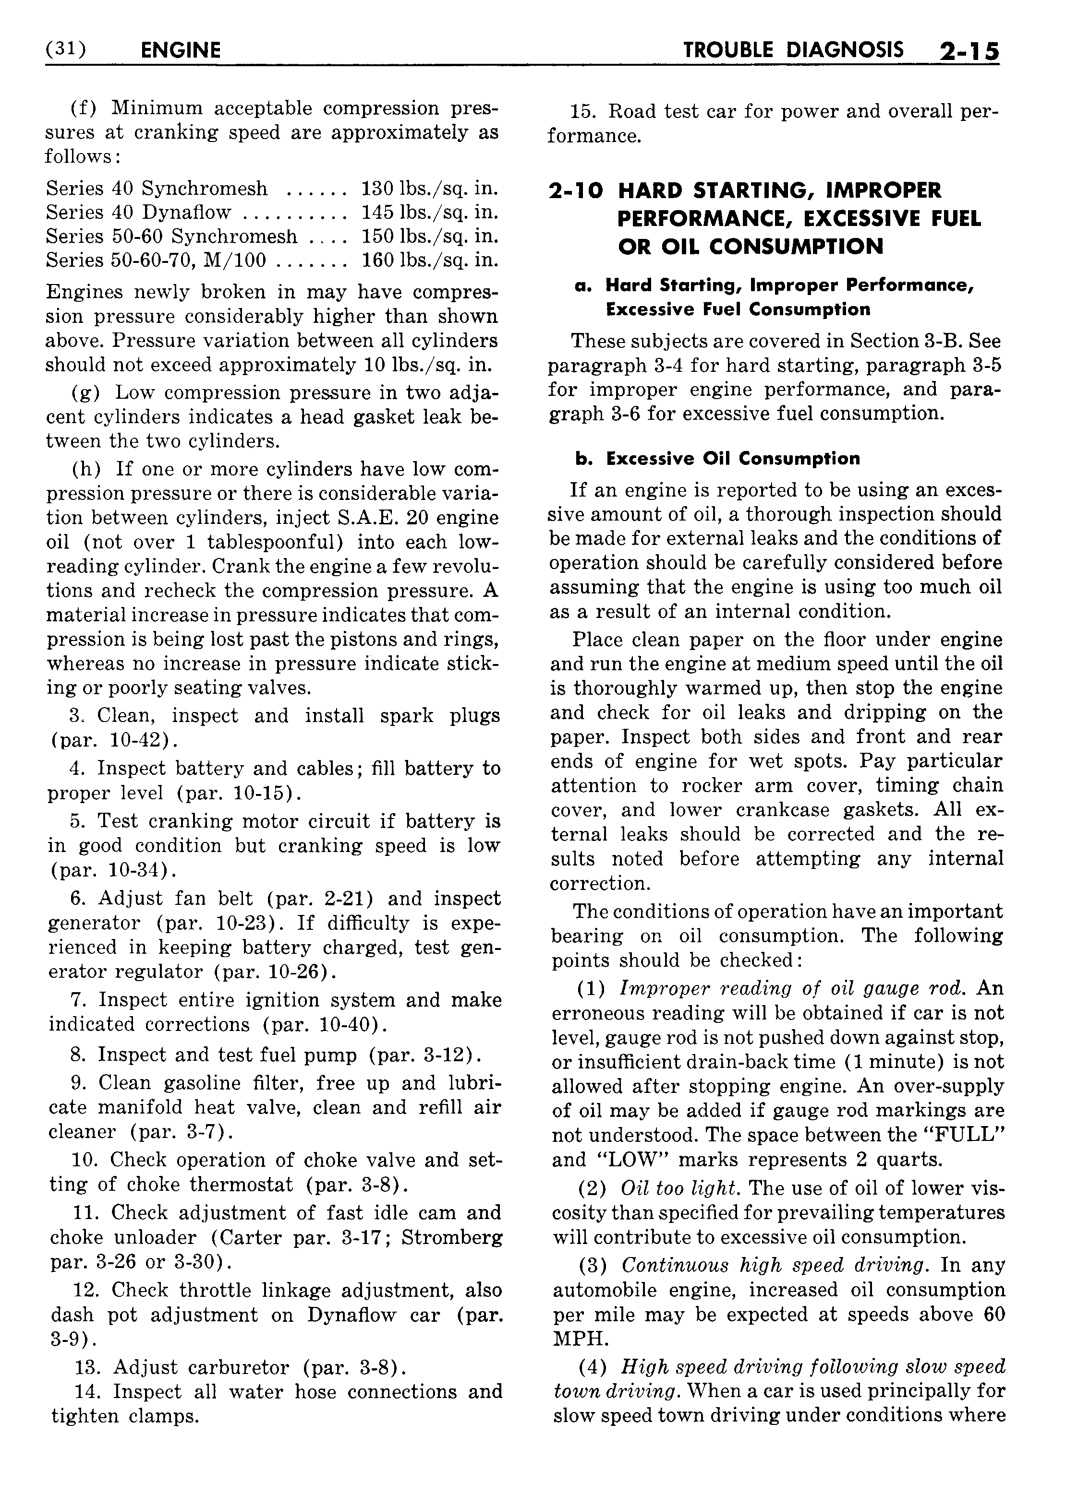 n_03 1954 Buick Shop Manual - Engine-015-015.jpg